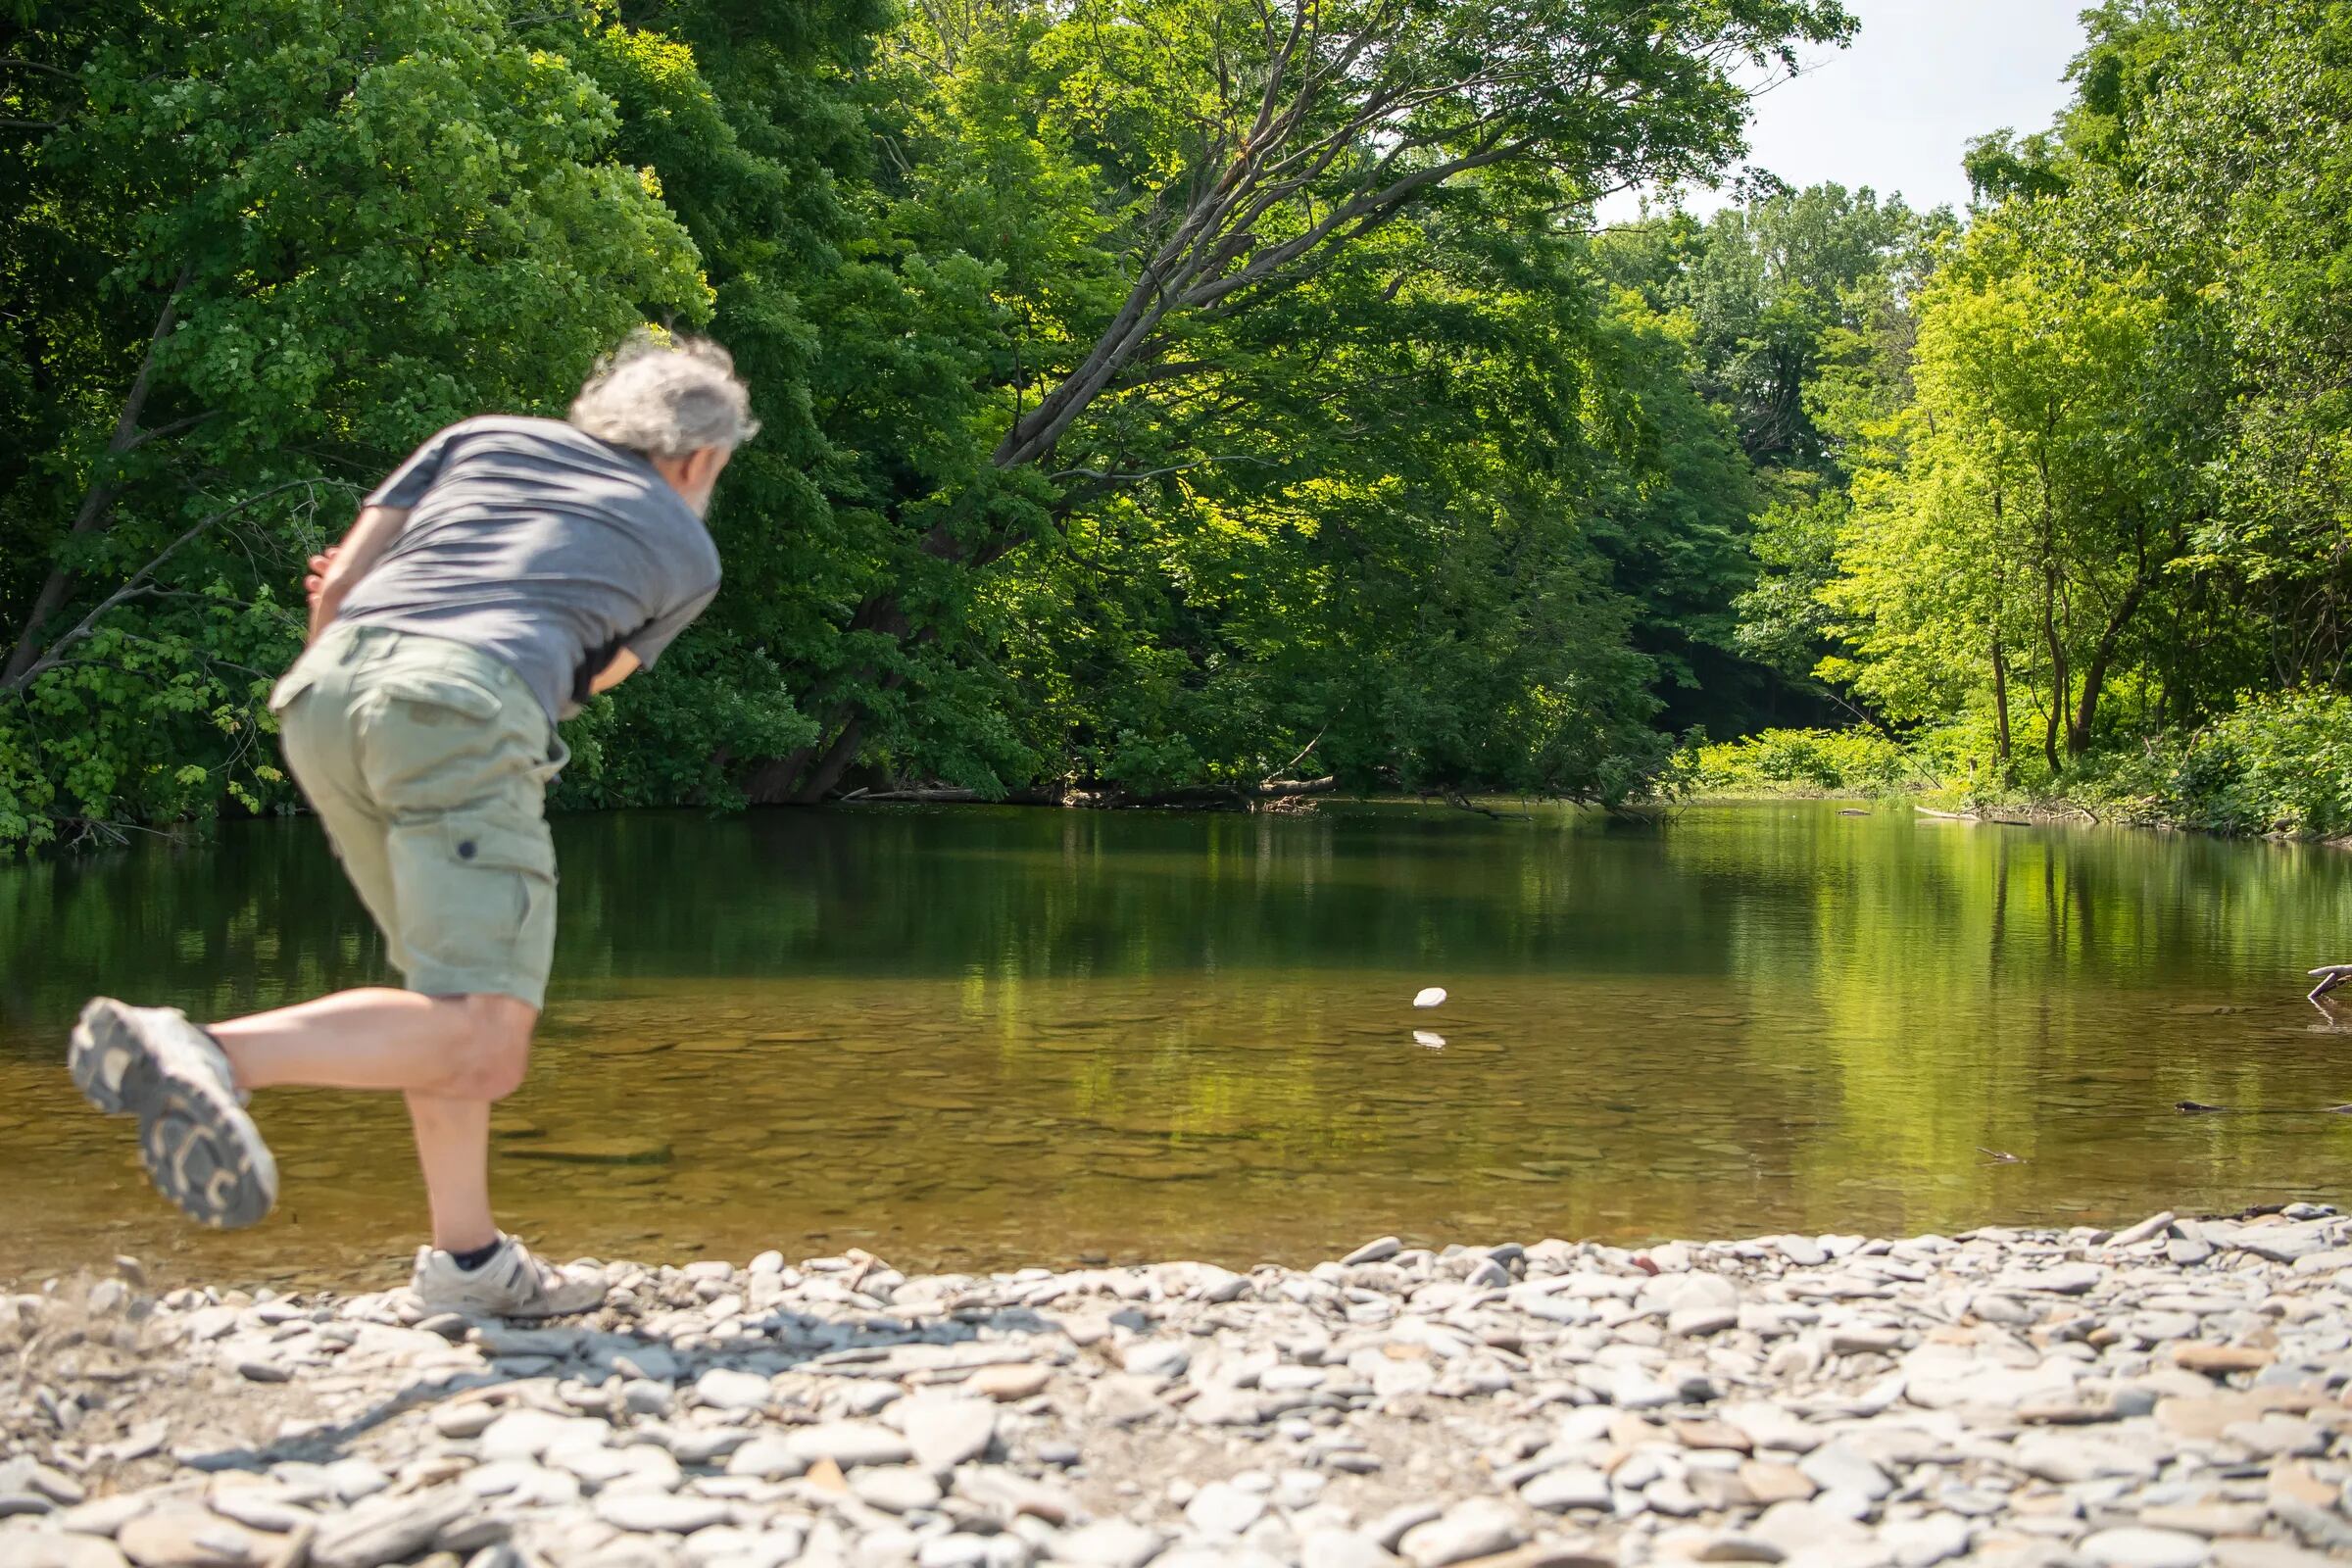 Pennsylvania 'mountain man' found peace, fame, and friendship through skipping  stones